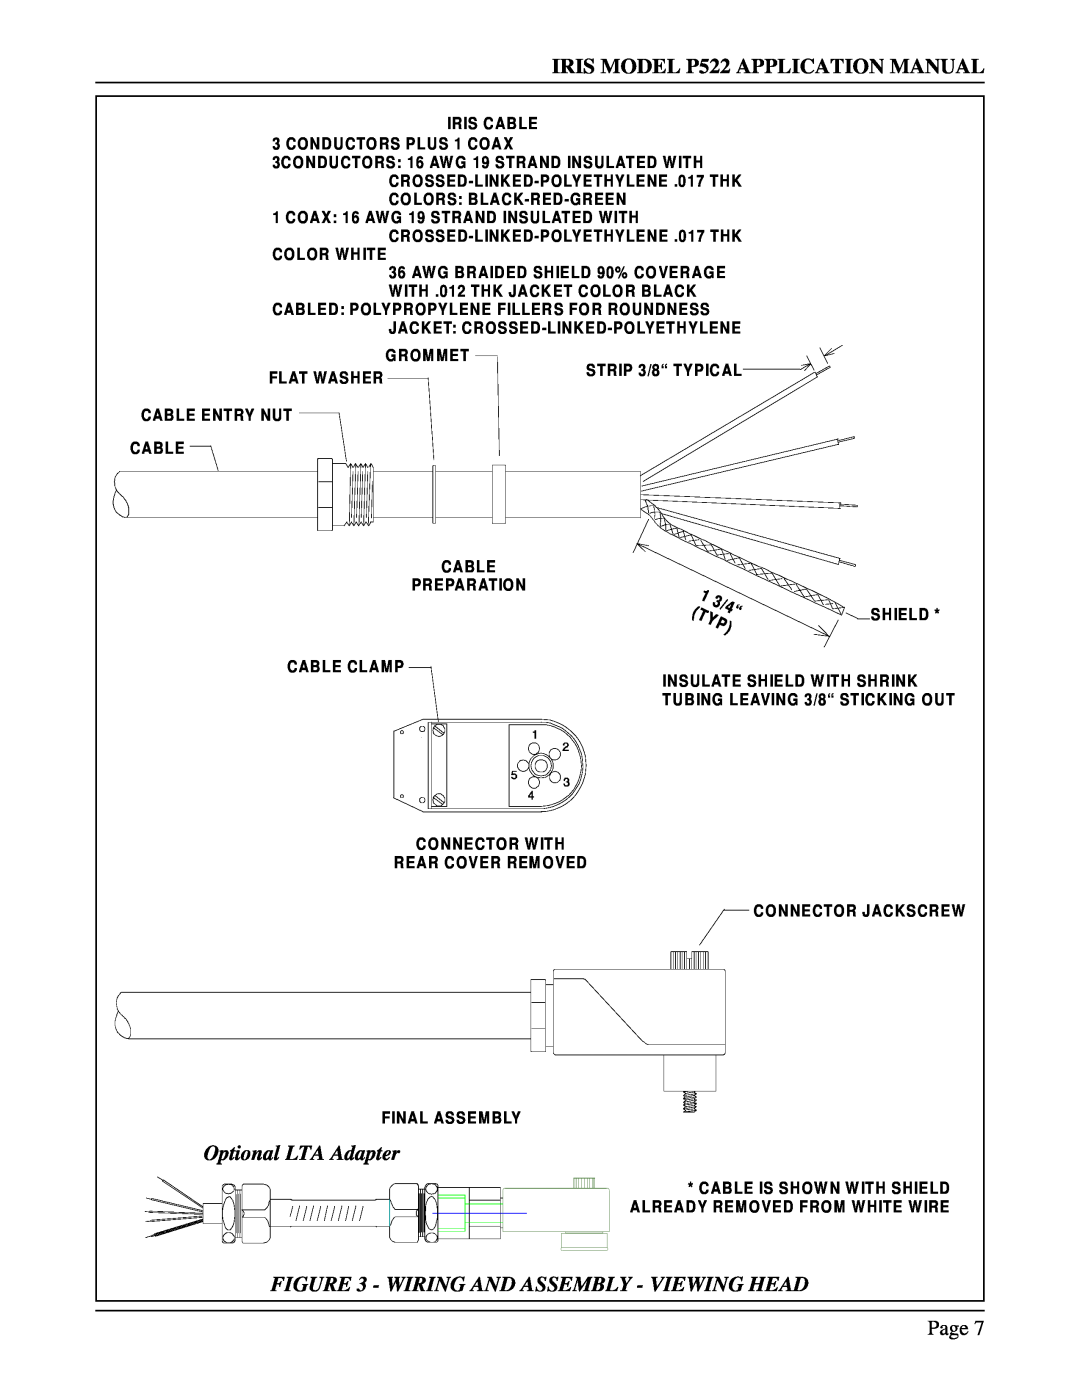 IRIS manual 3/4“, IRIS MODEL P522 APPLICATION MANUAL, Optional LTA Adapter, Wiring And Assembly - Viewing Head 